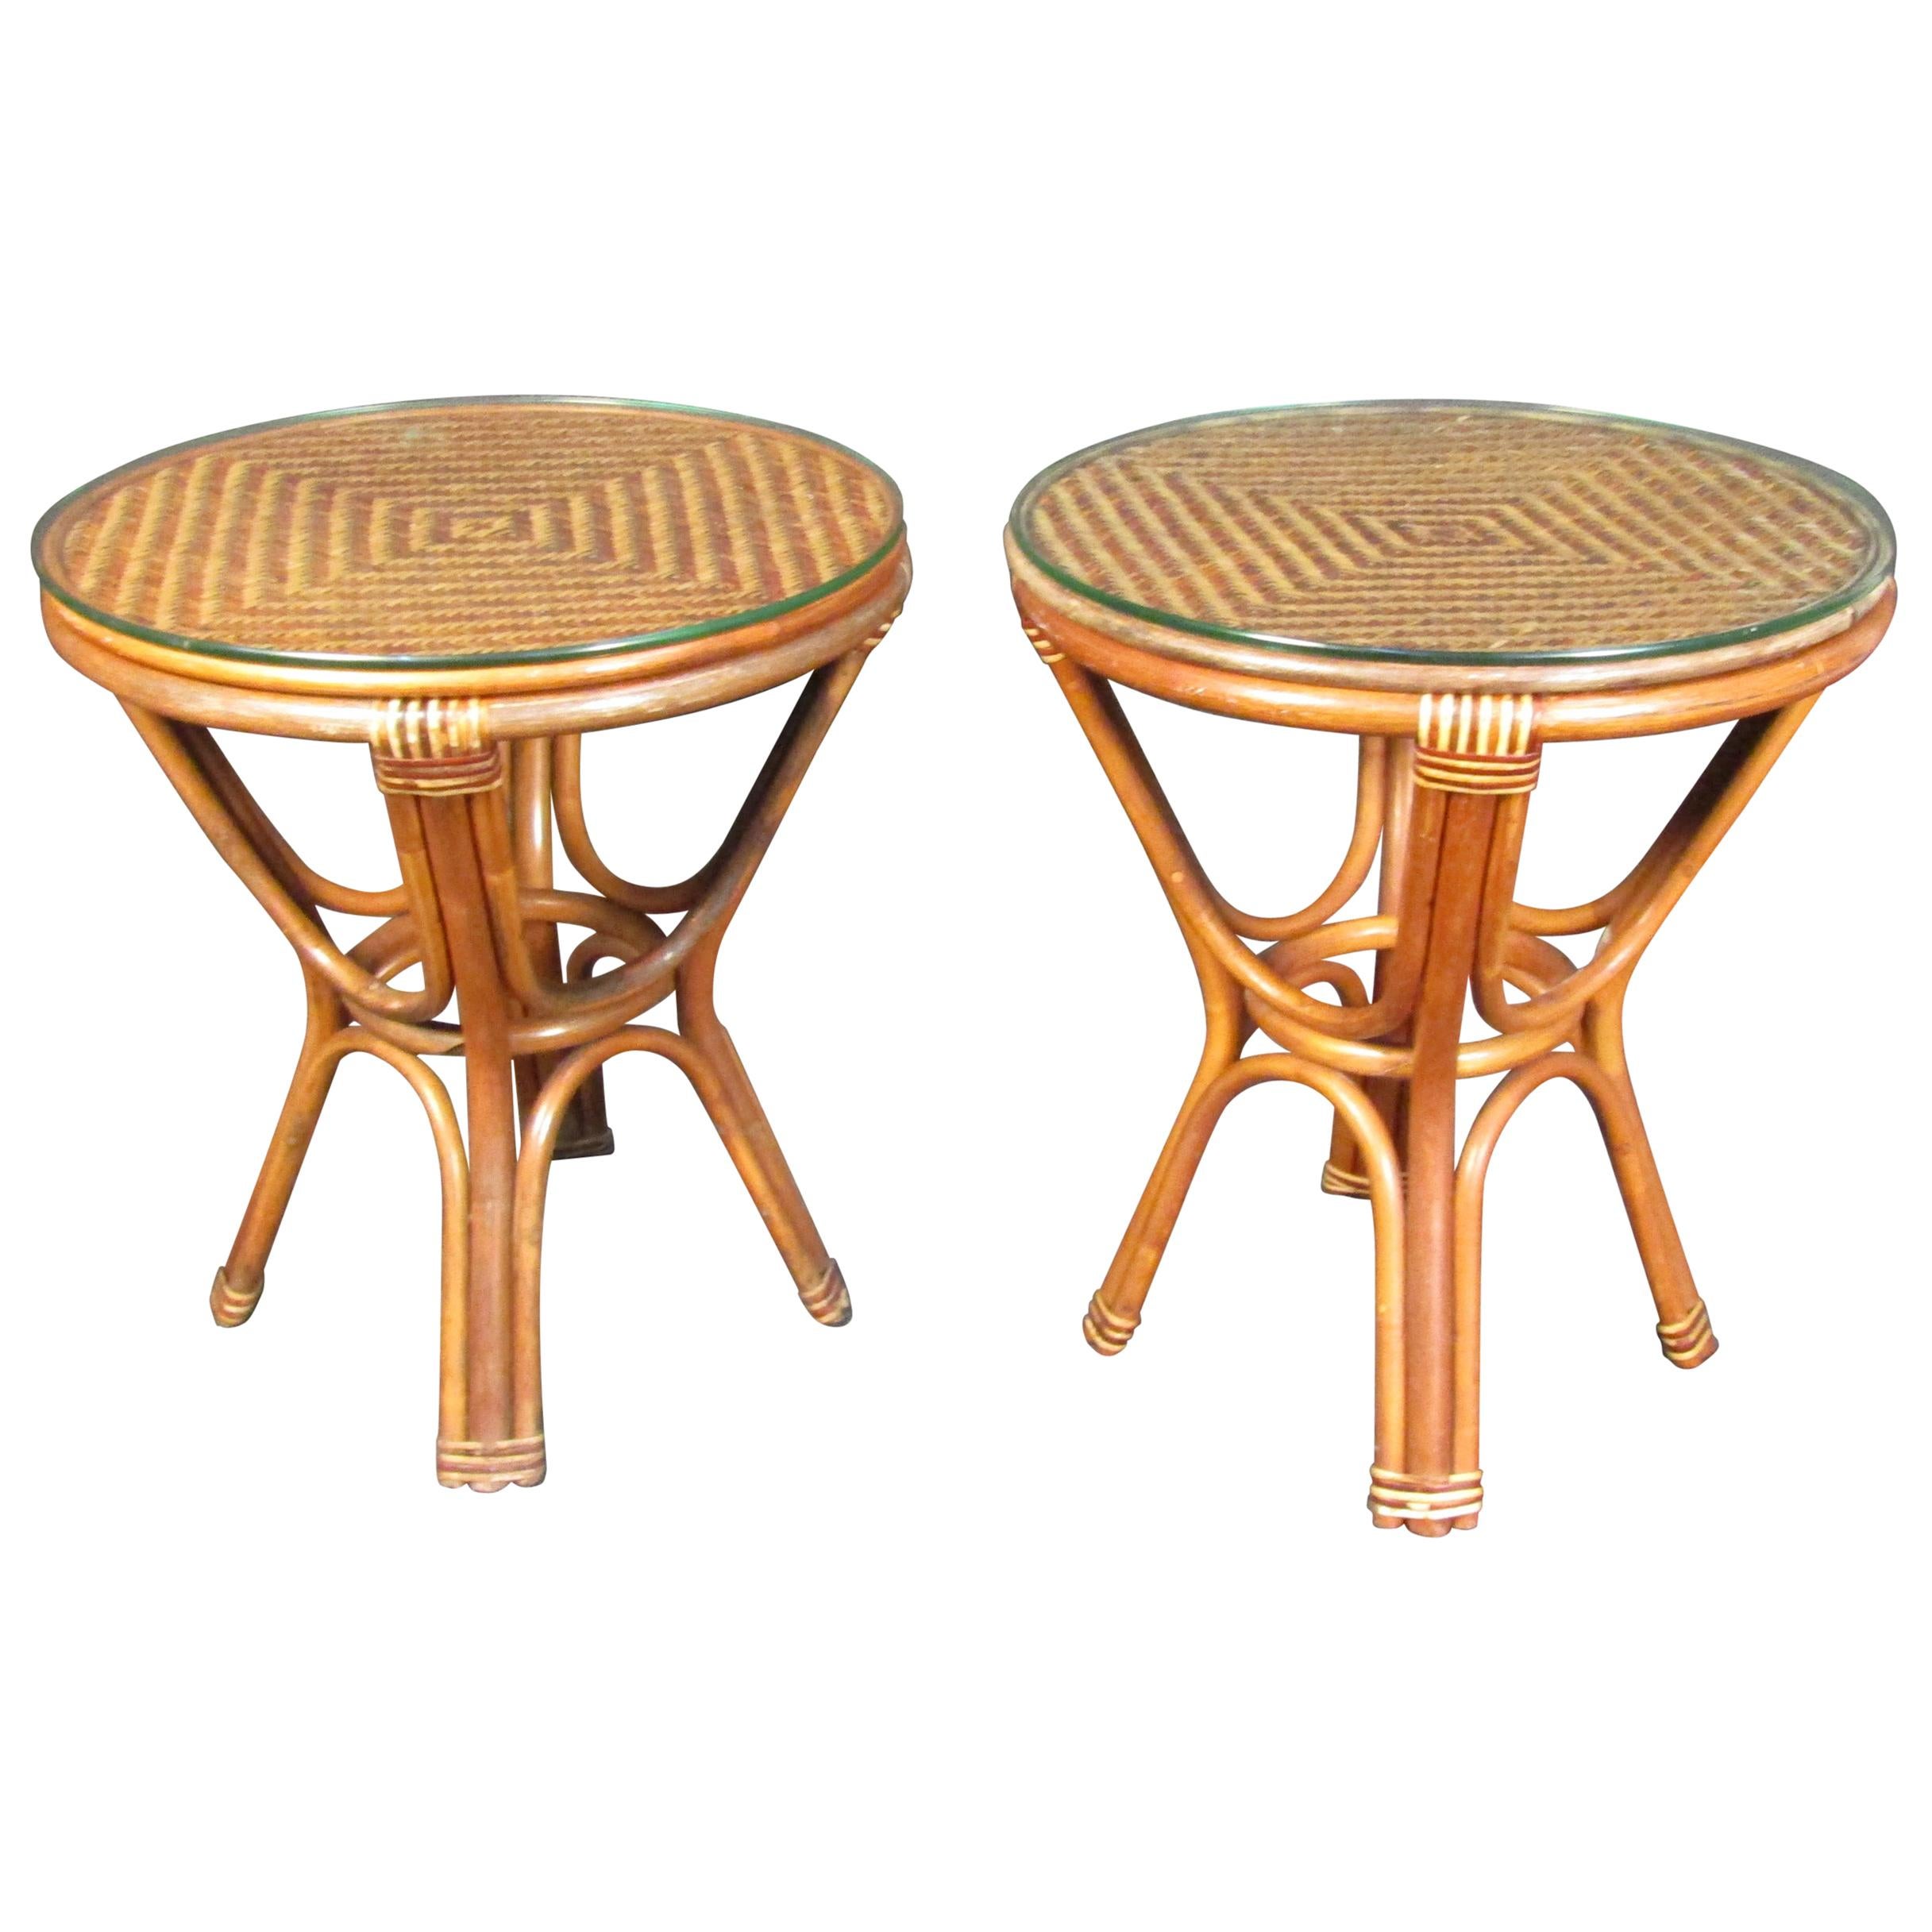 Pair of Vintage Wicker Side Tables